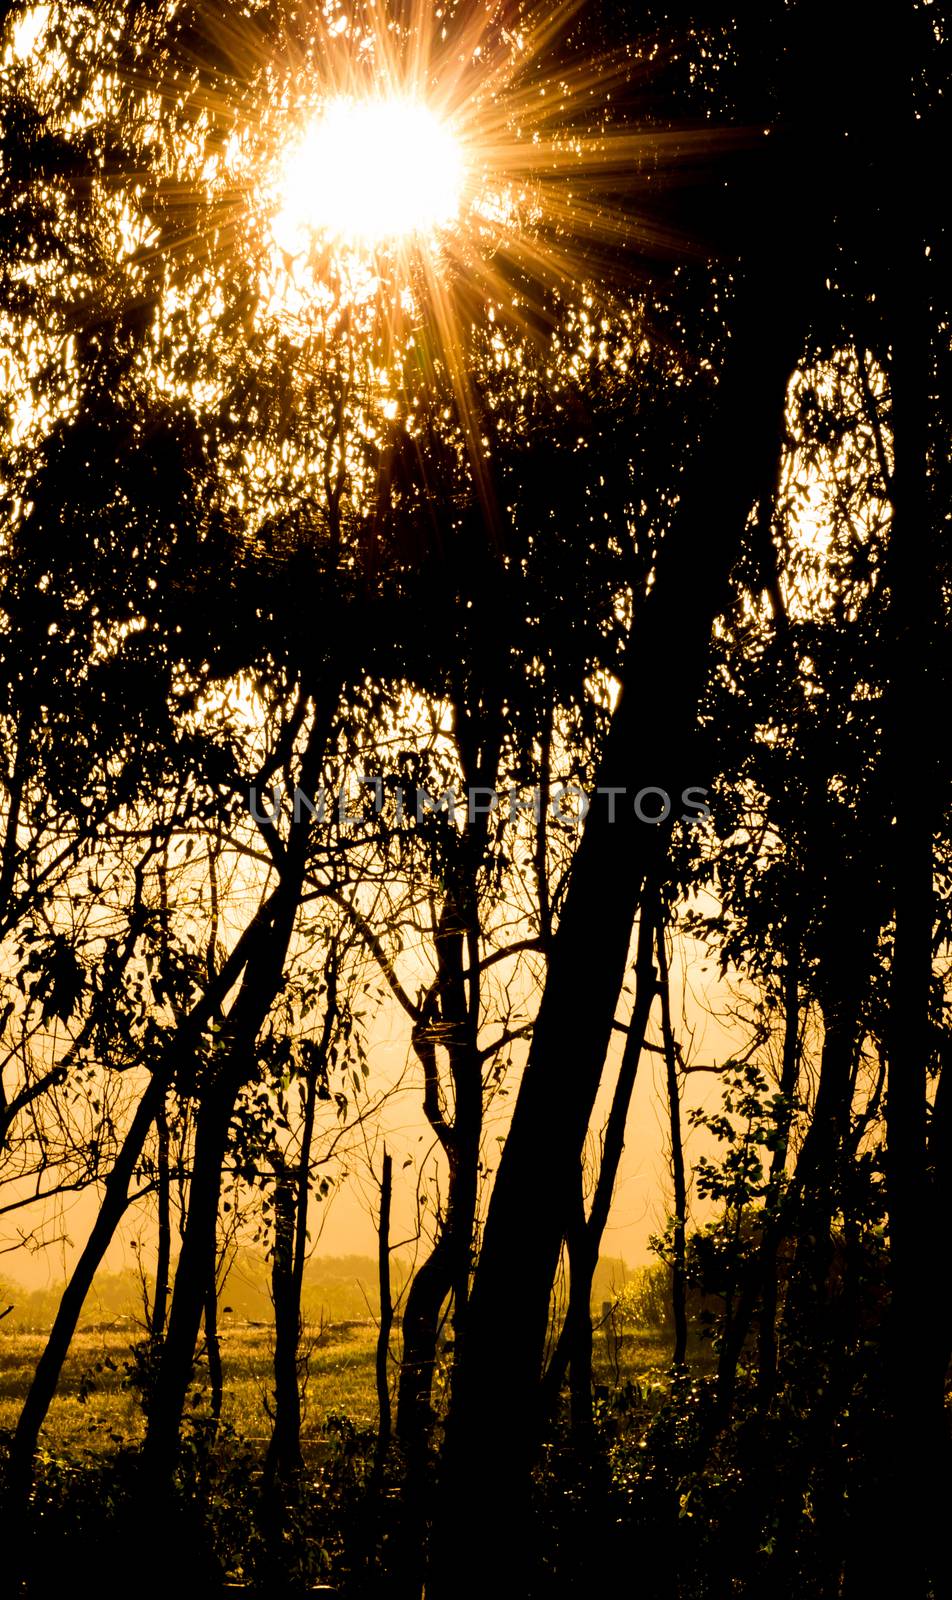 Sunset Starburst in Forest by fouroaks